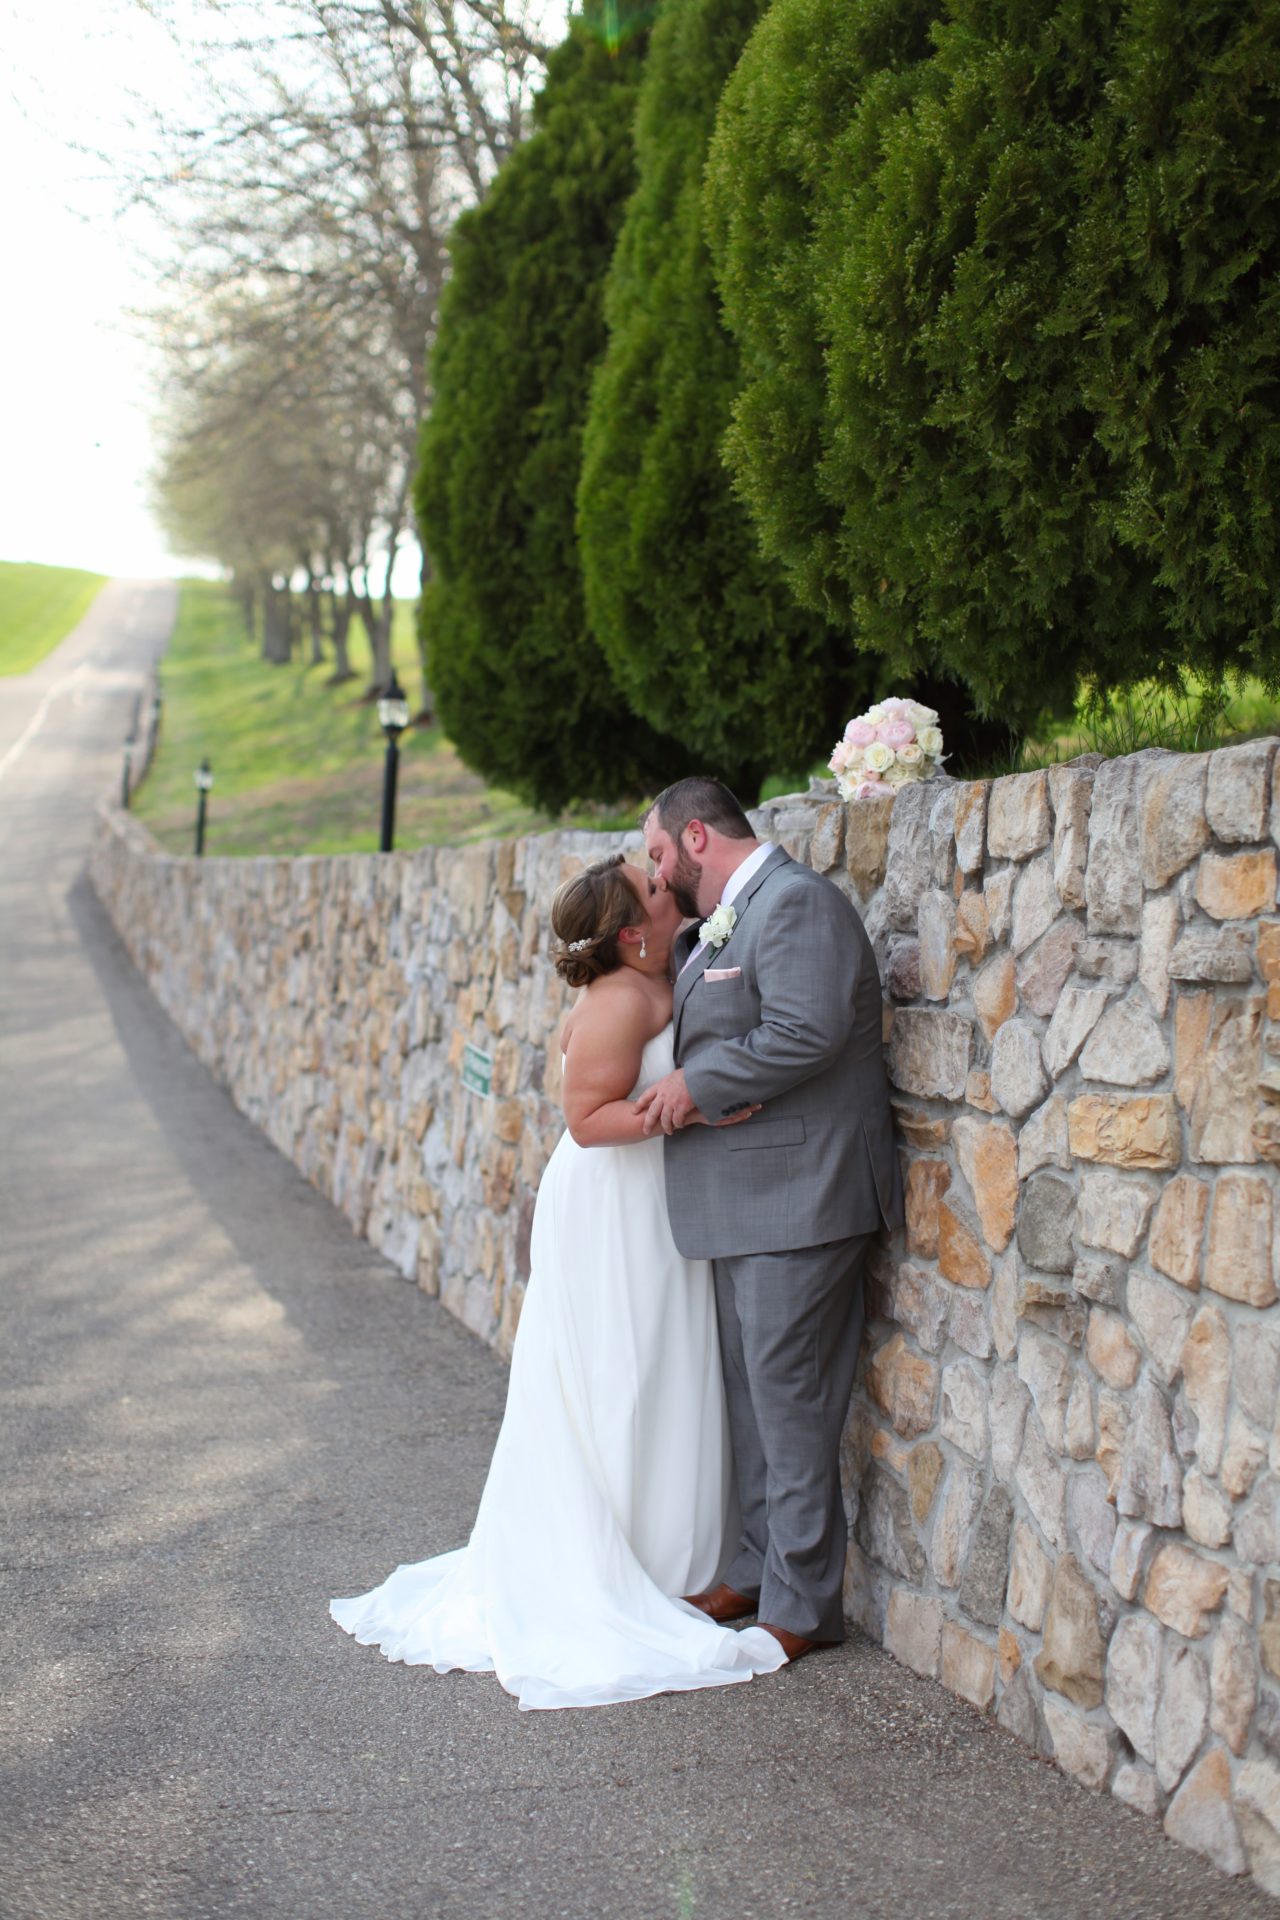 kiss by stone wall Sam & Amy's Wedding April 15 2017